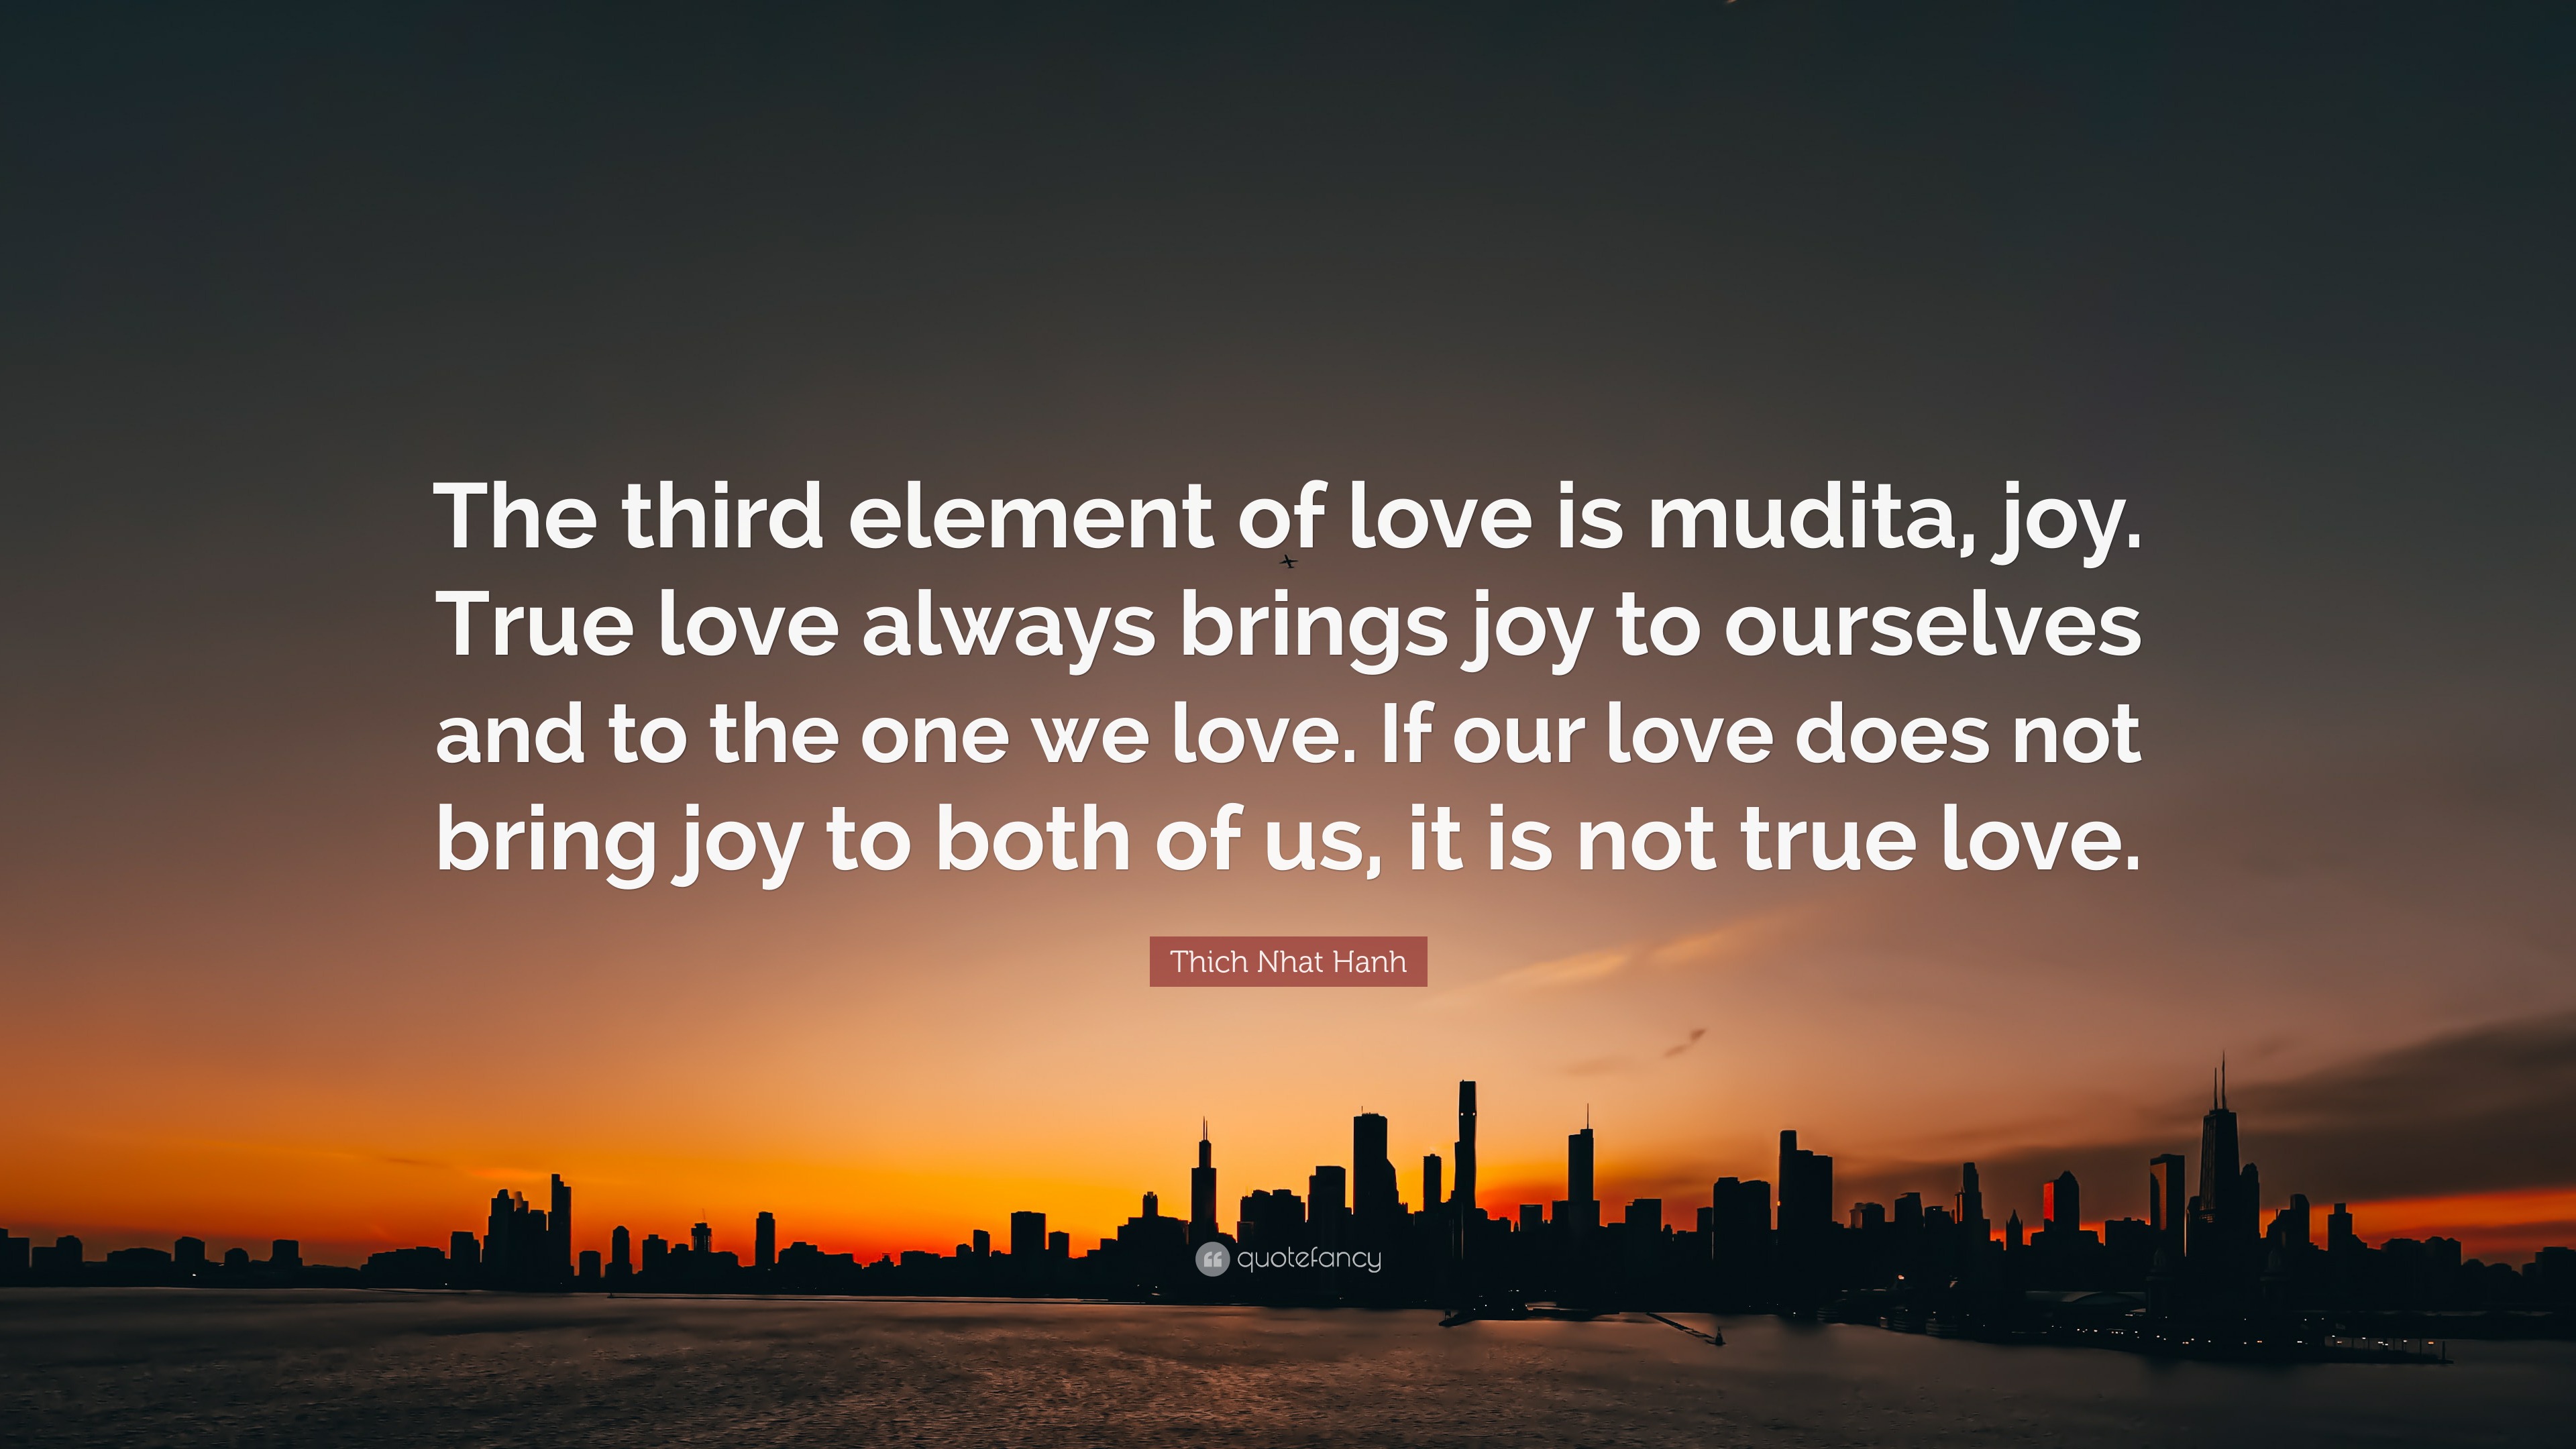 Thich Nhat Hanh Quote: “The third element of love is mudita, joy